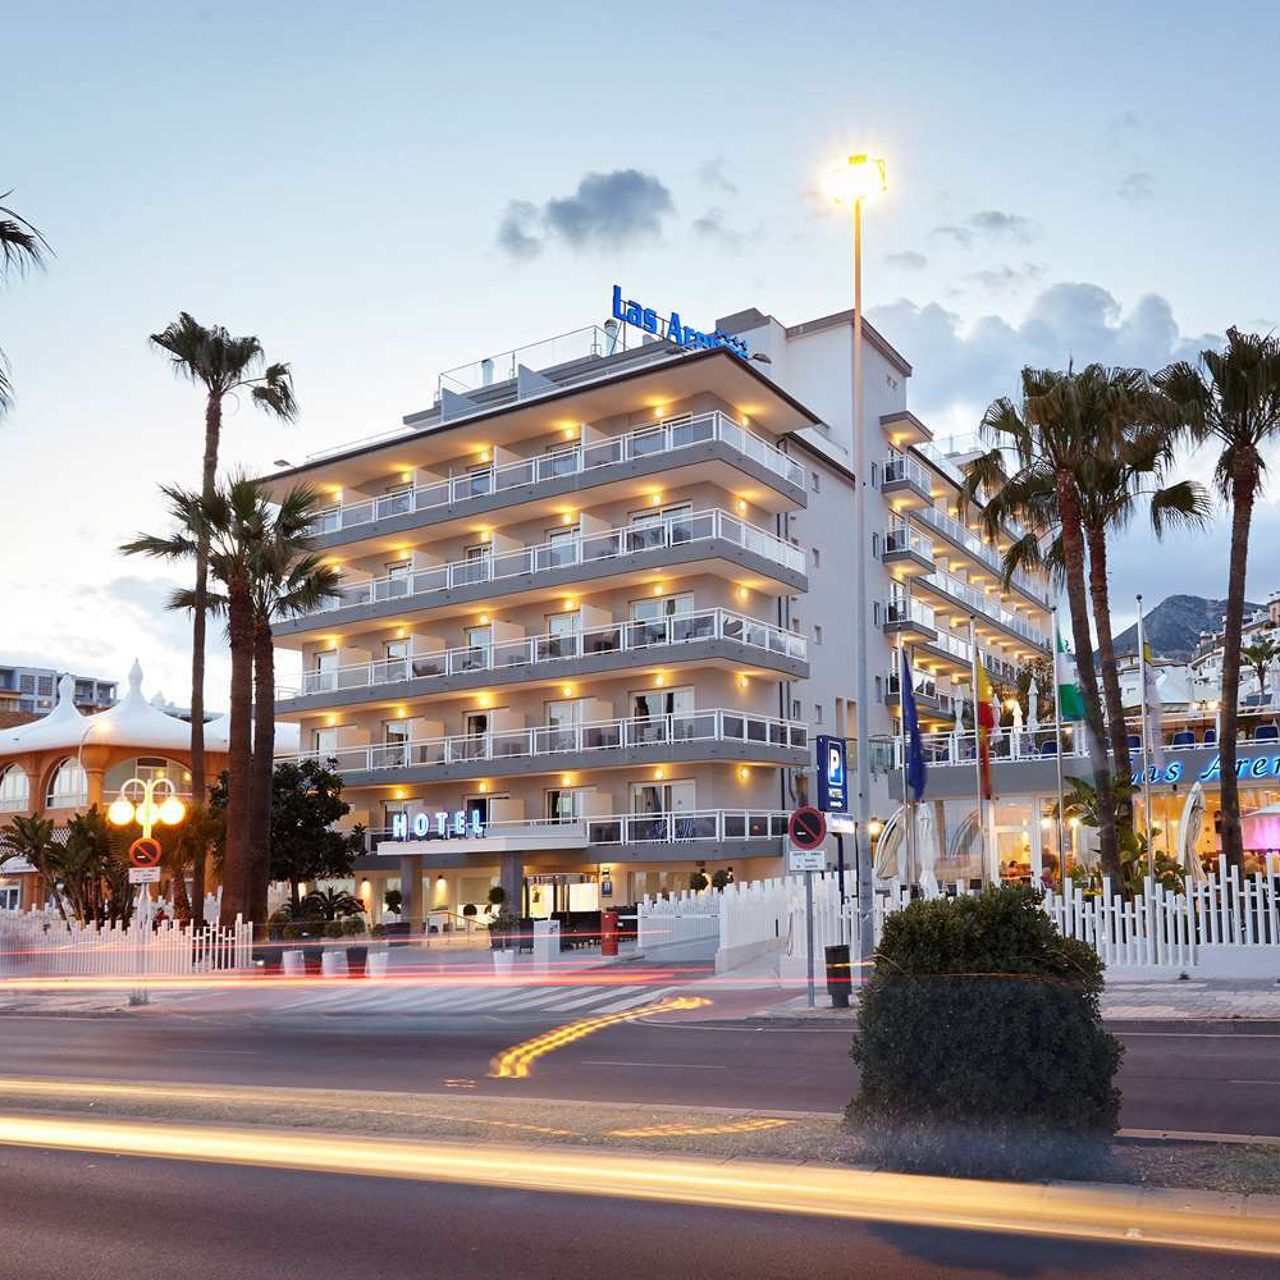 Hotel Las Arenas - Benalmádena - Great prices at HOTEL INFO